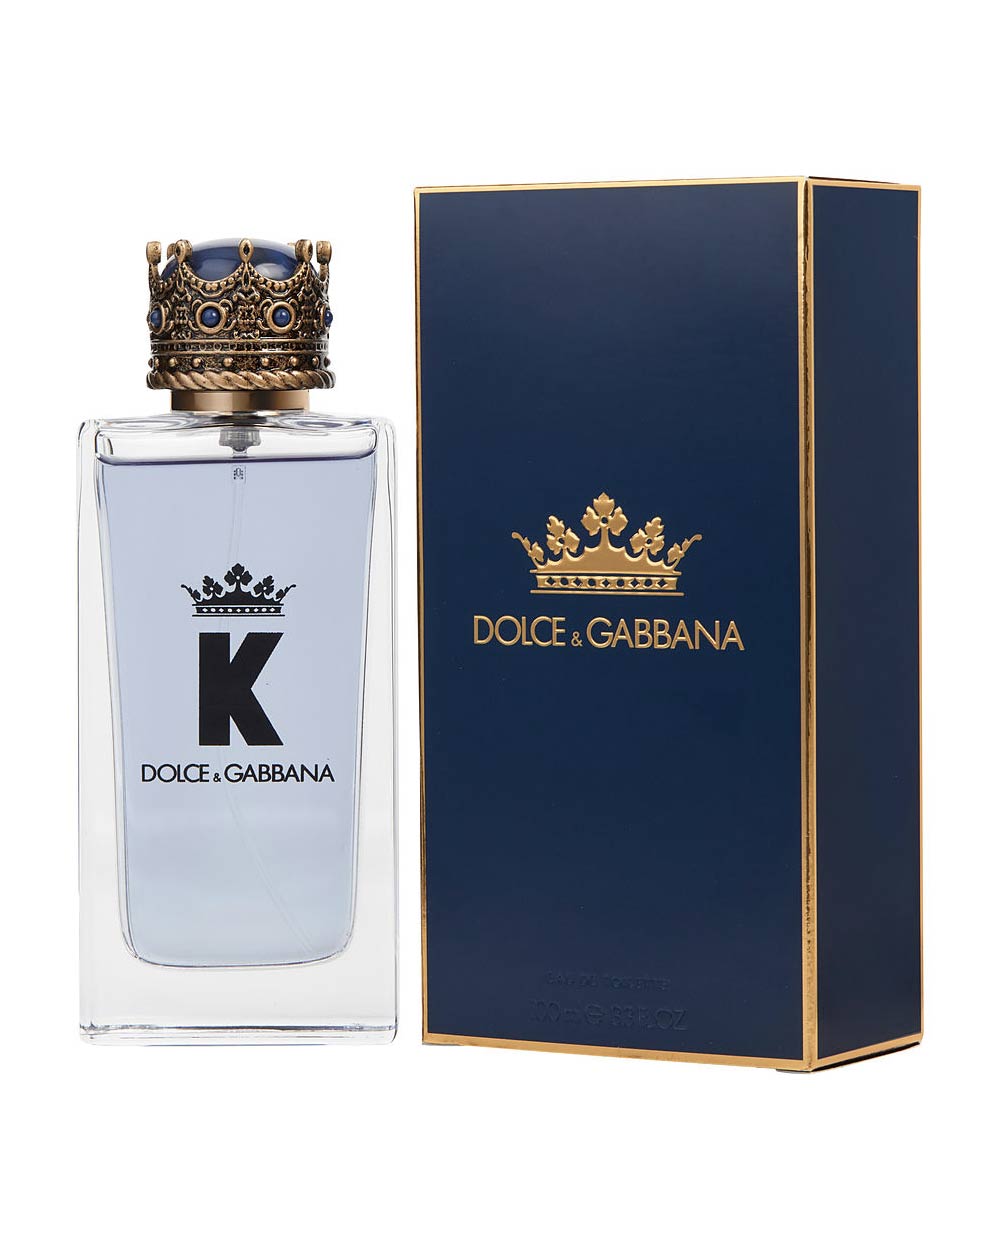 Arriba 30+ imagen dolce gabbana perfume king - Abzlocal.mx